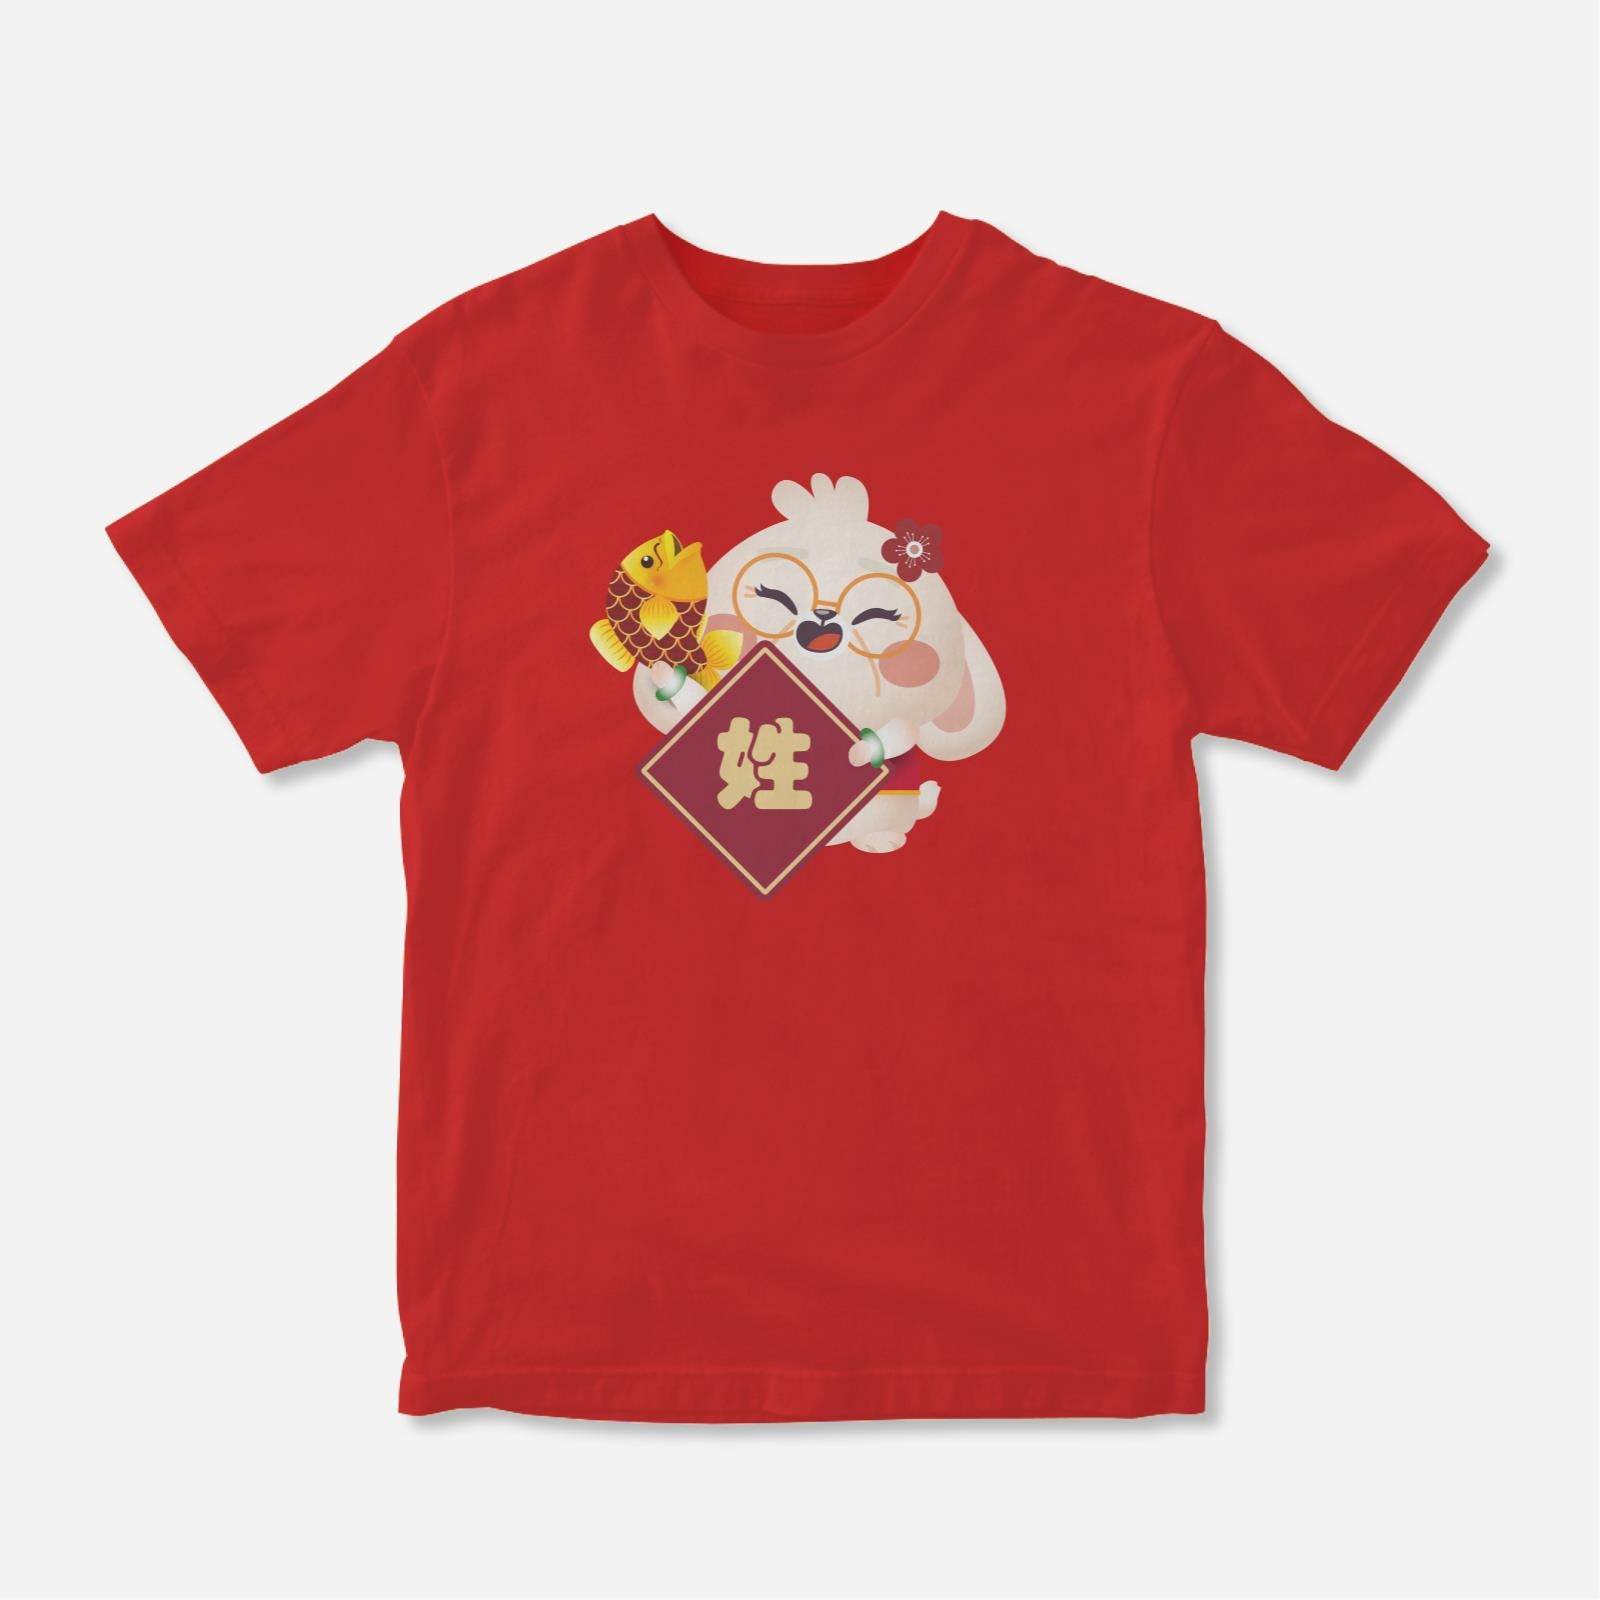 Cny Rabbit Family - Surname Grandma Rabbit Kids Tee Shirt with Chinese Surname